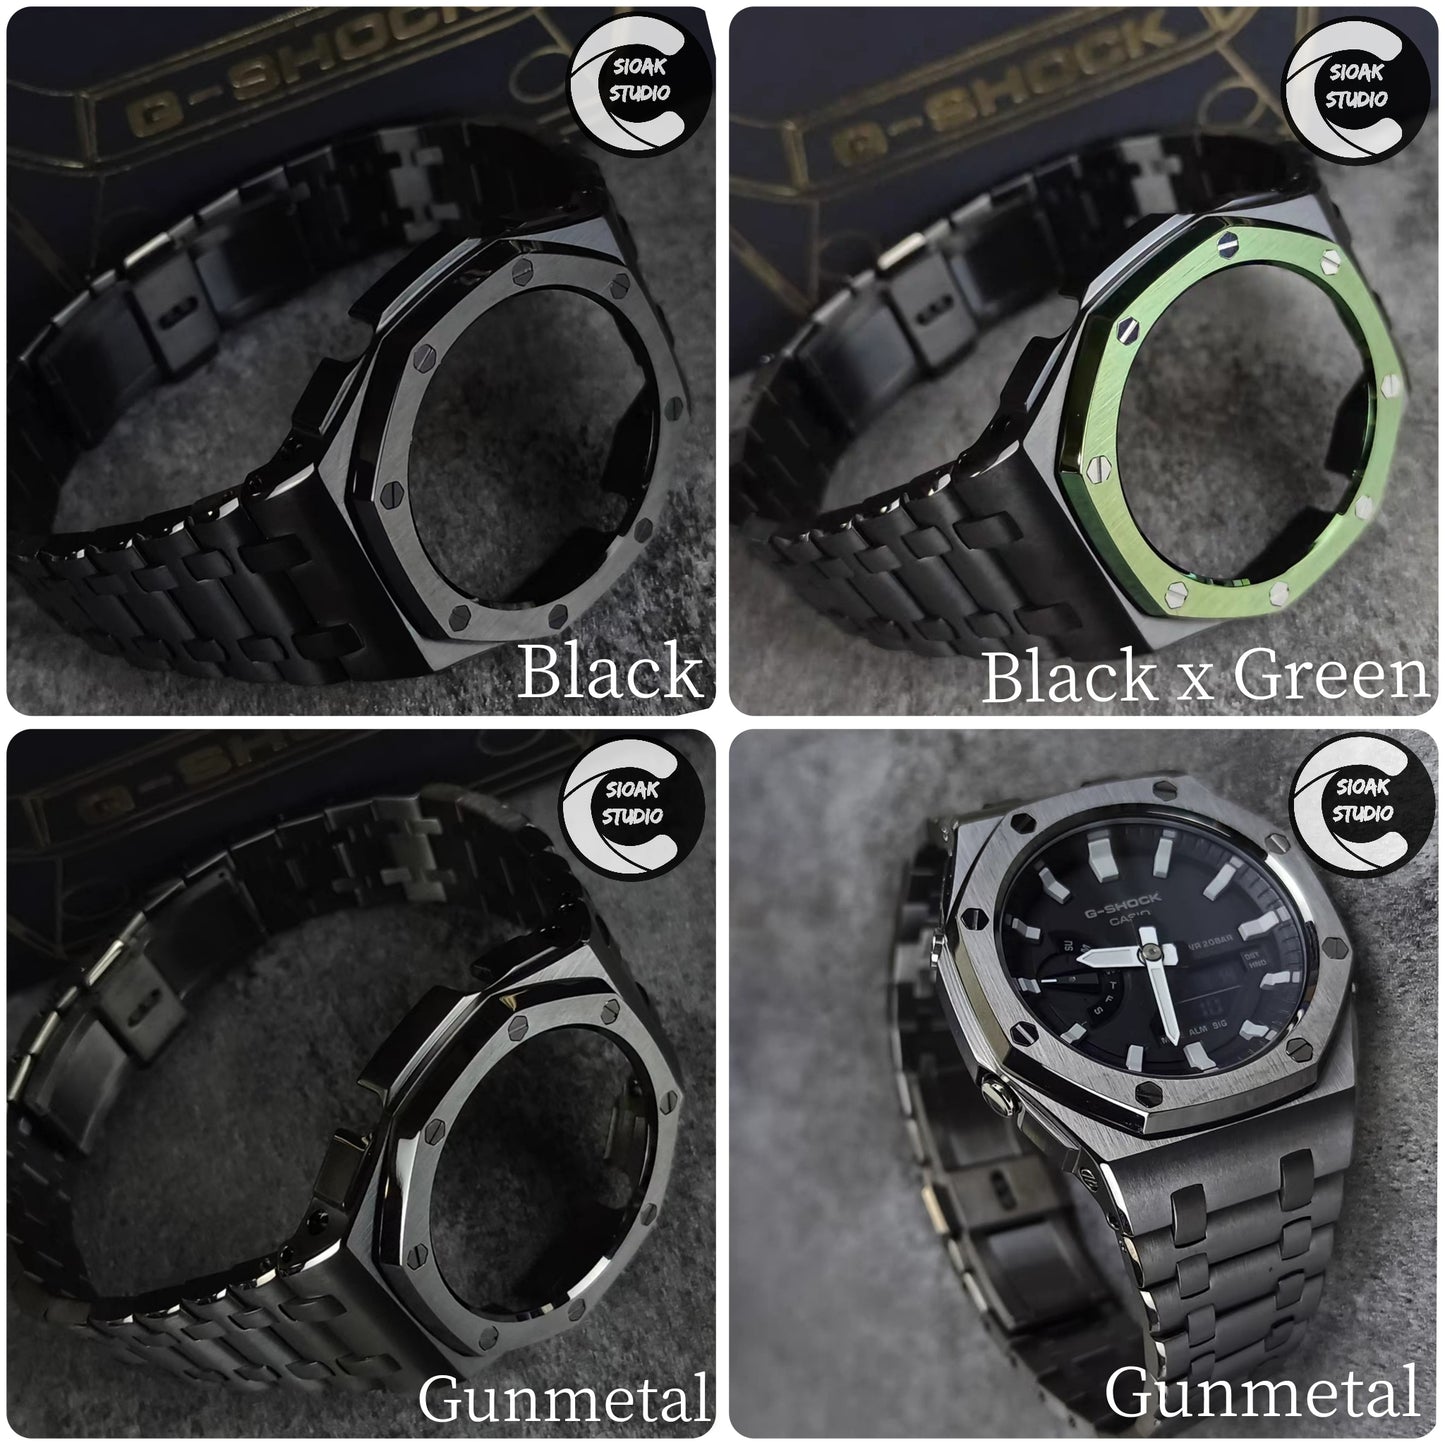 Casioak Mod Watch Solar Bluetooth Offshore Superior Black Case Metal Strap Black Time Mark Black Dial Yellow Hands 44mm - Casioak Studio